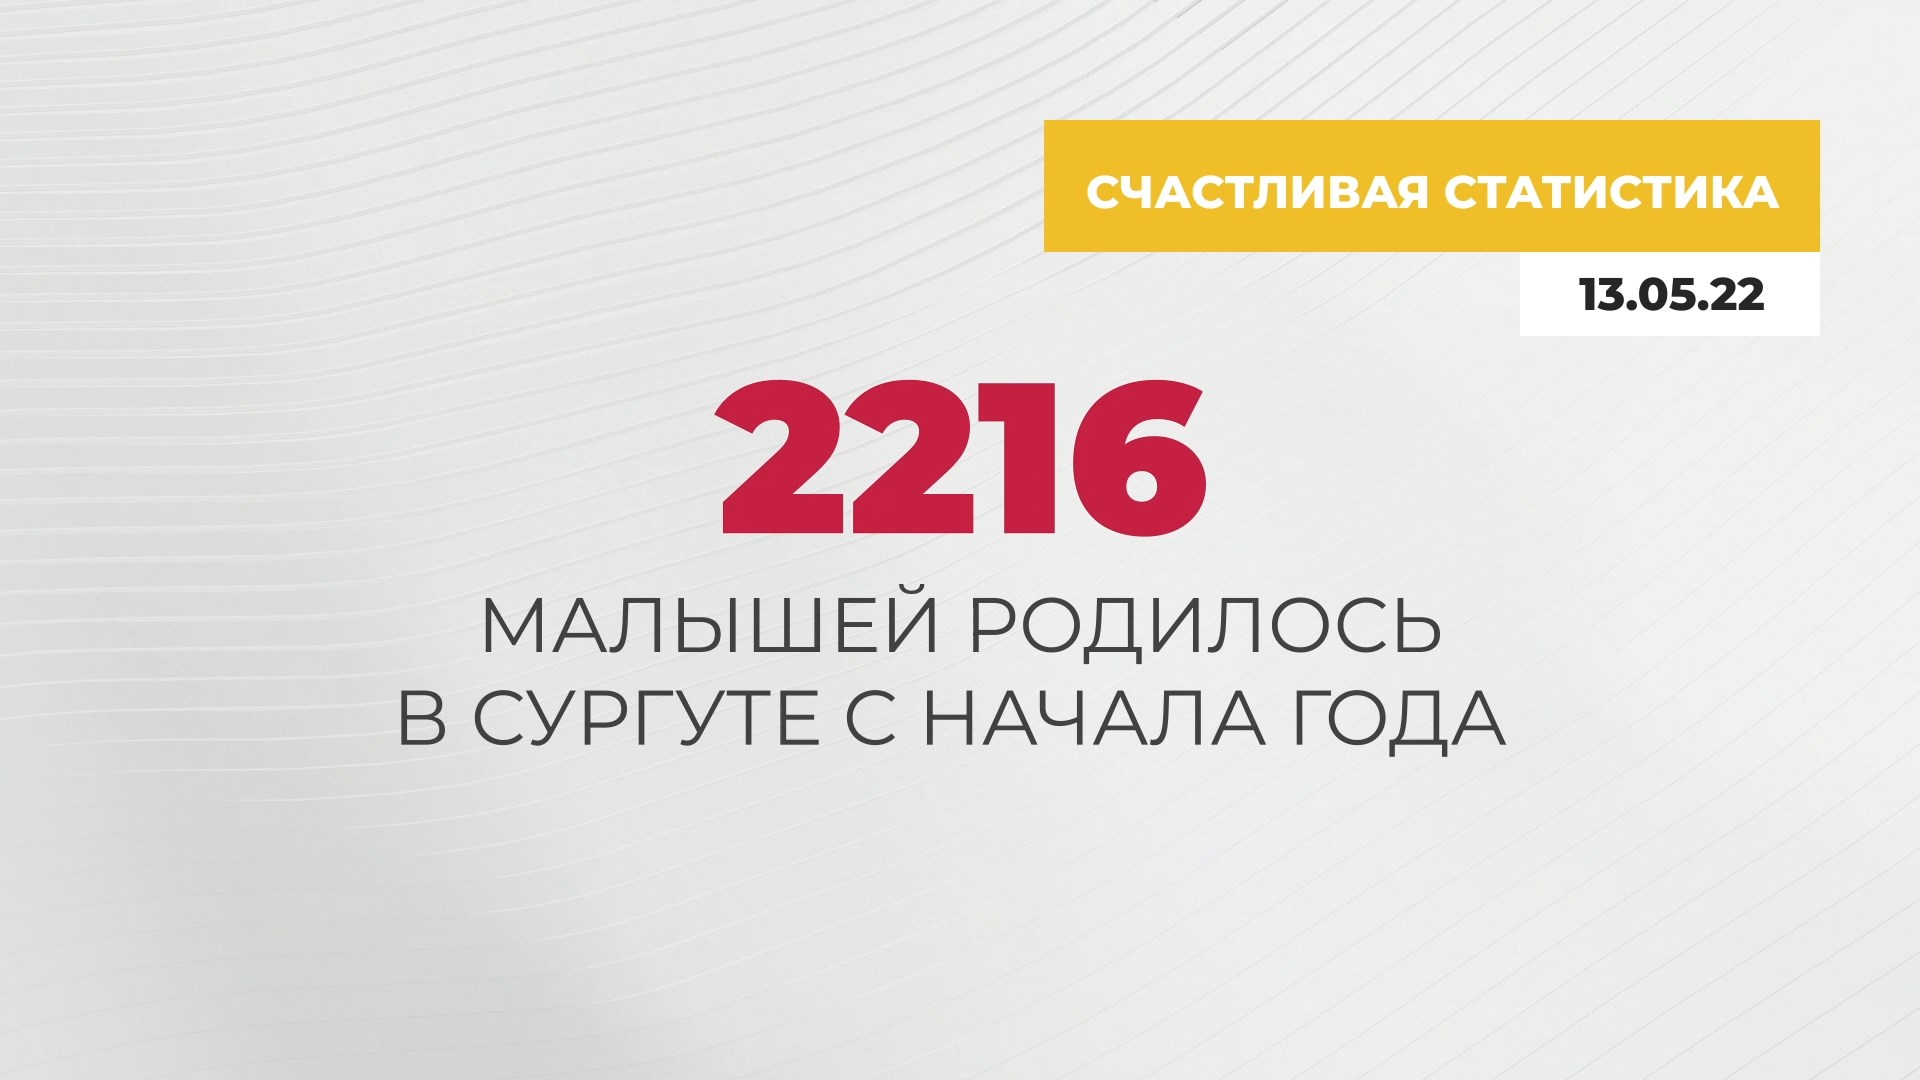 Счастливая статистика Сургута. 13.05.2022